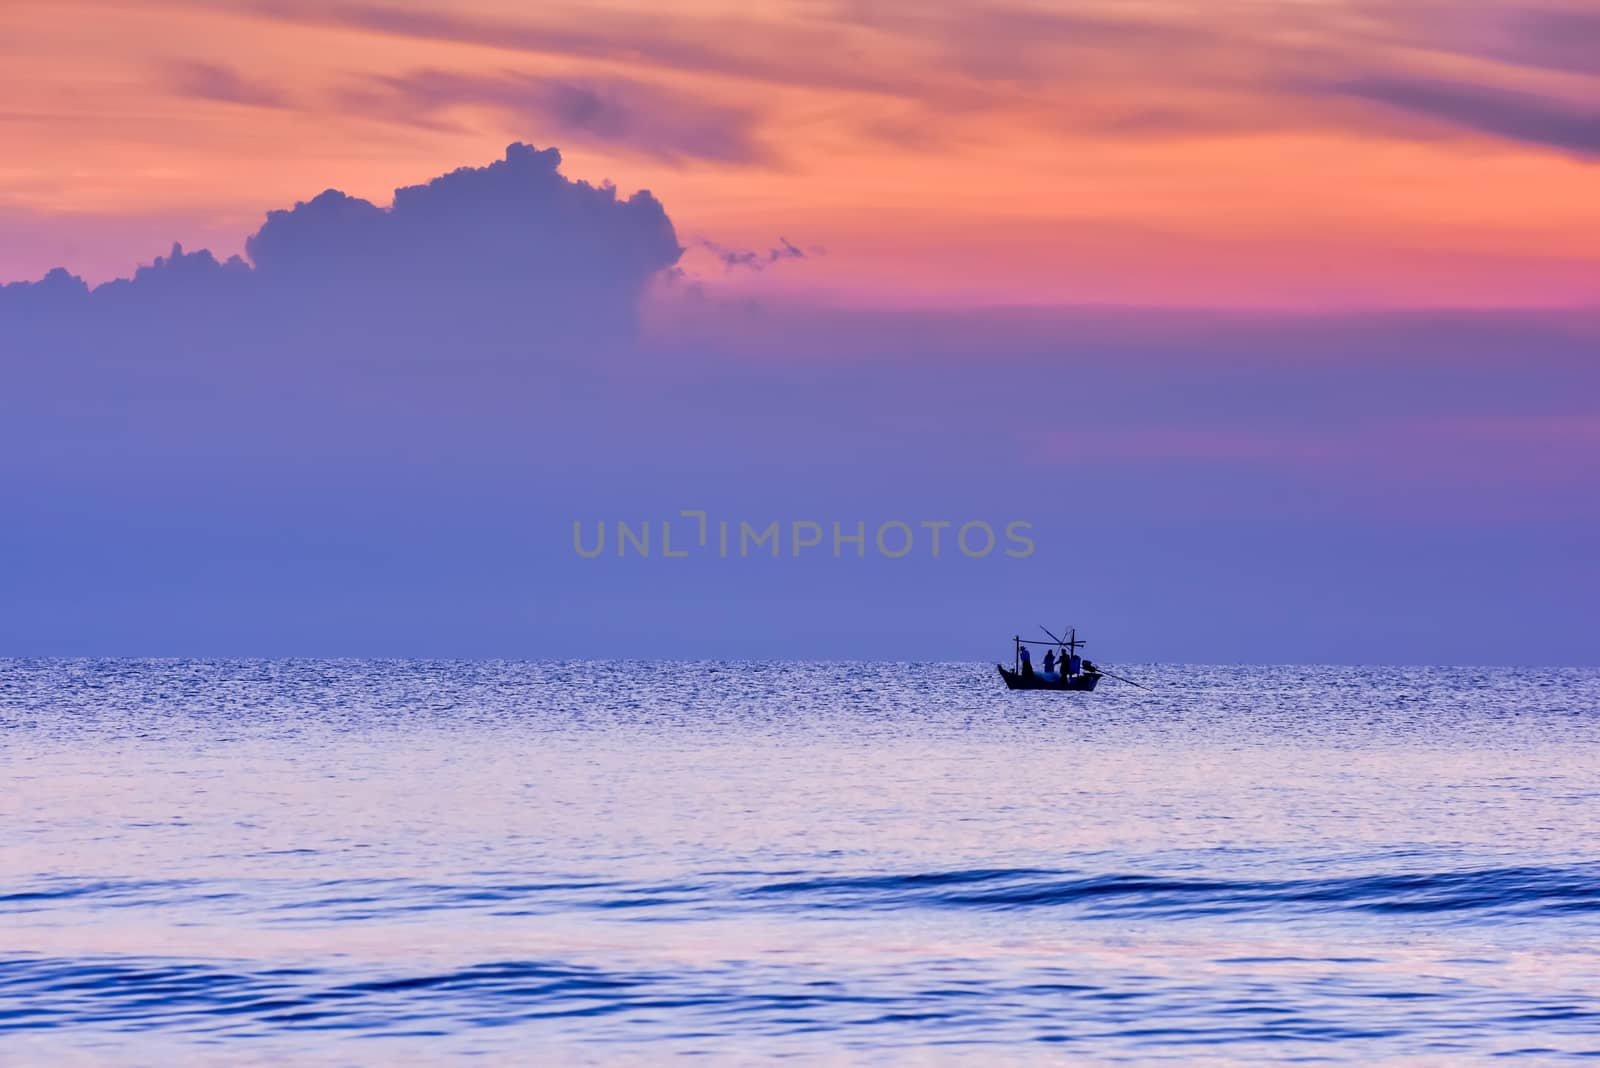 sunrise at Hua Hin Thailand by hinnamsaisuy